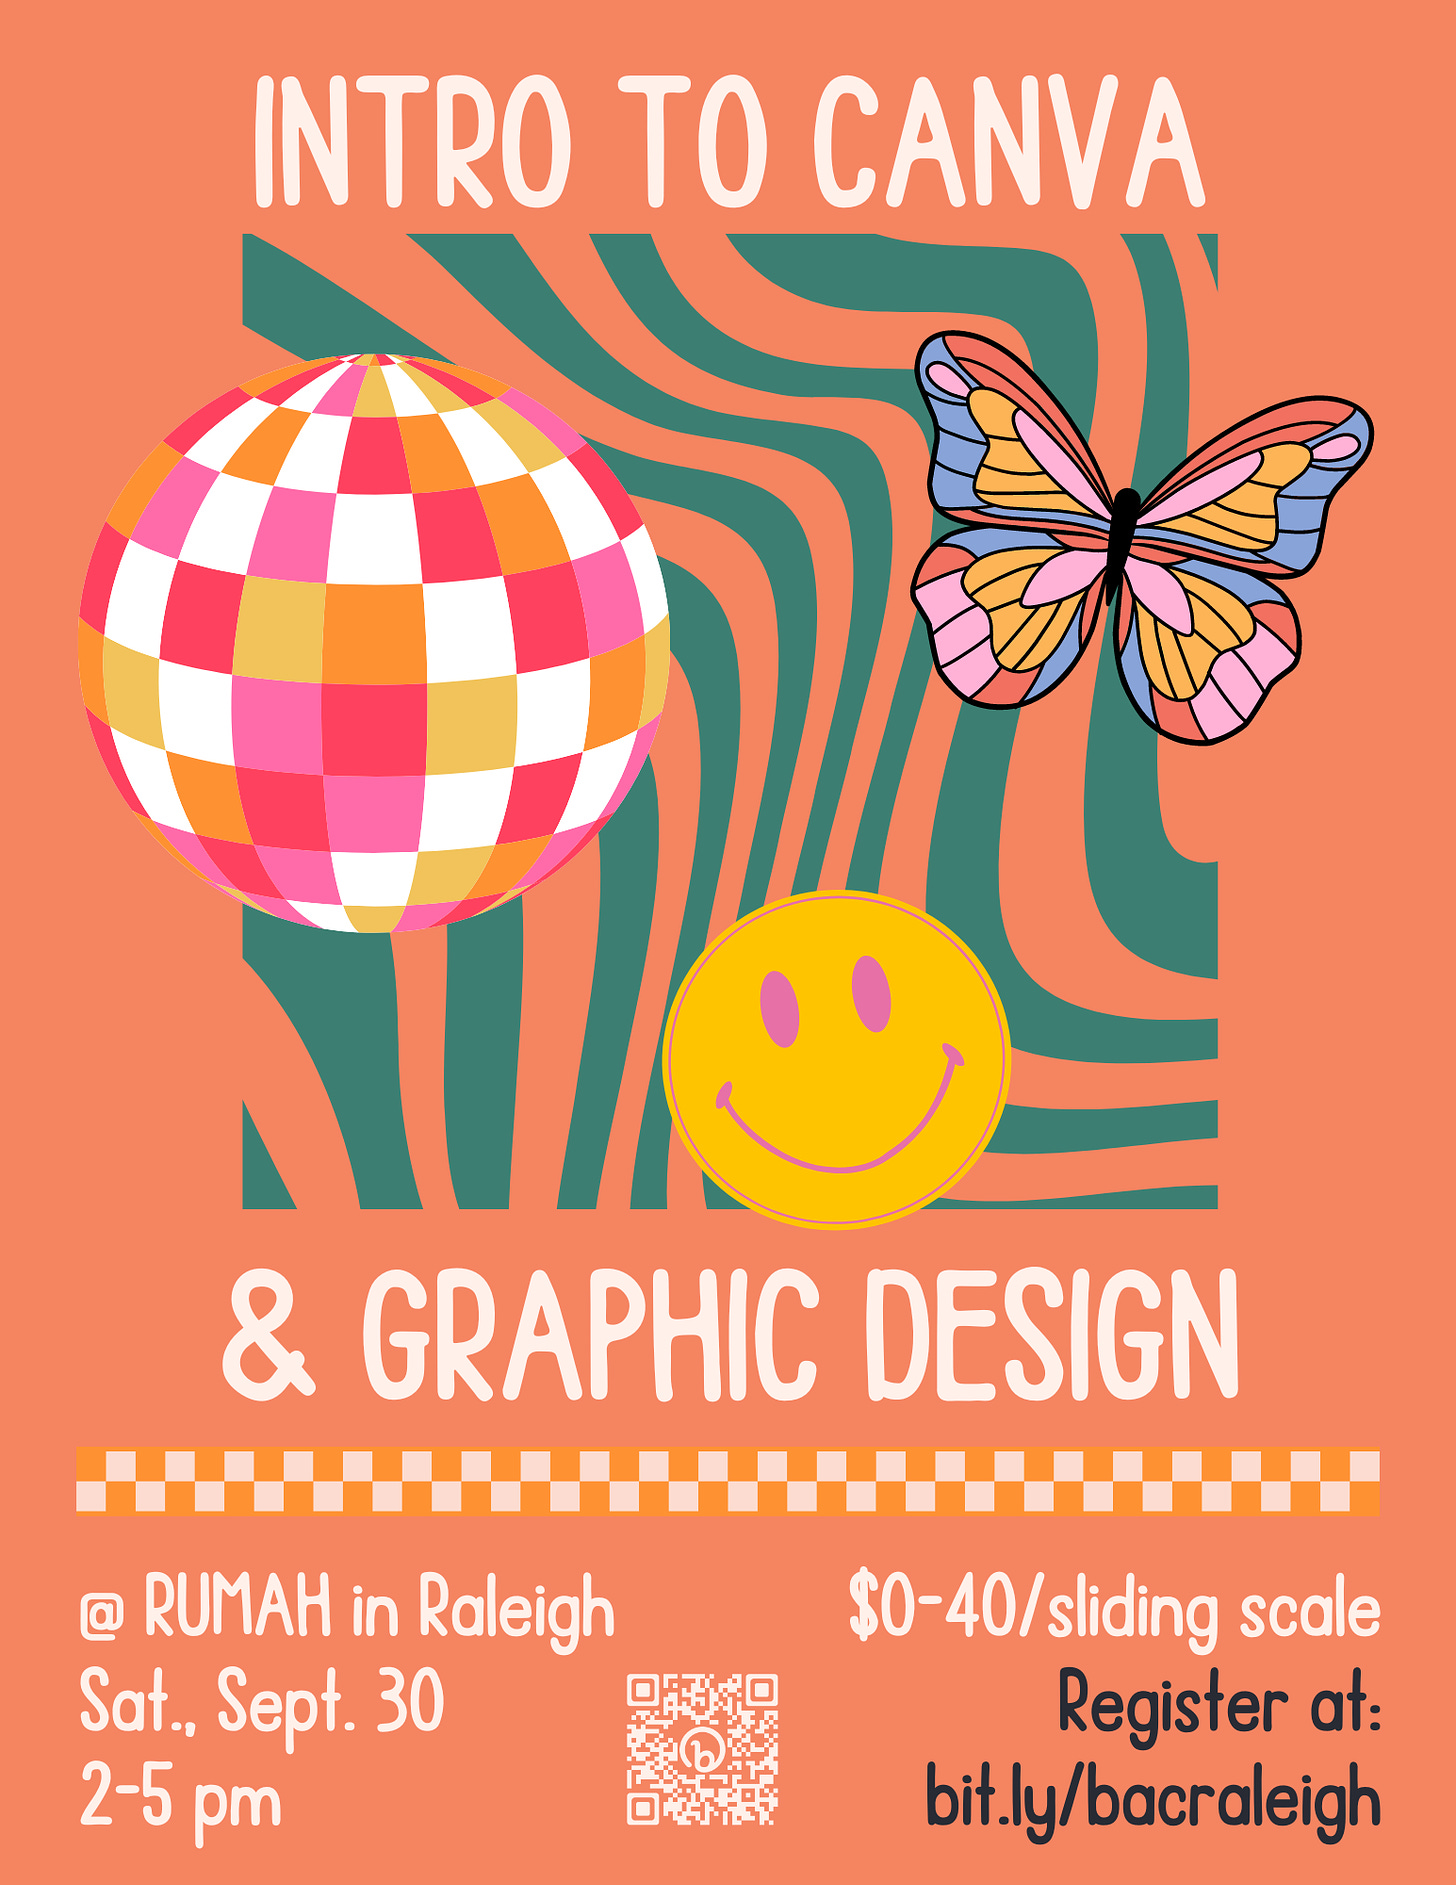 Promo poster for Intro to Canva & Graphic Design